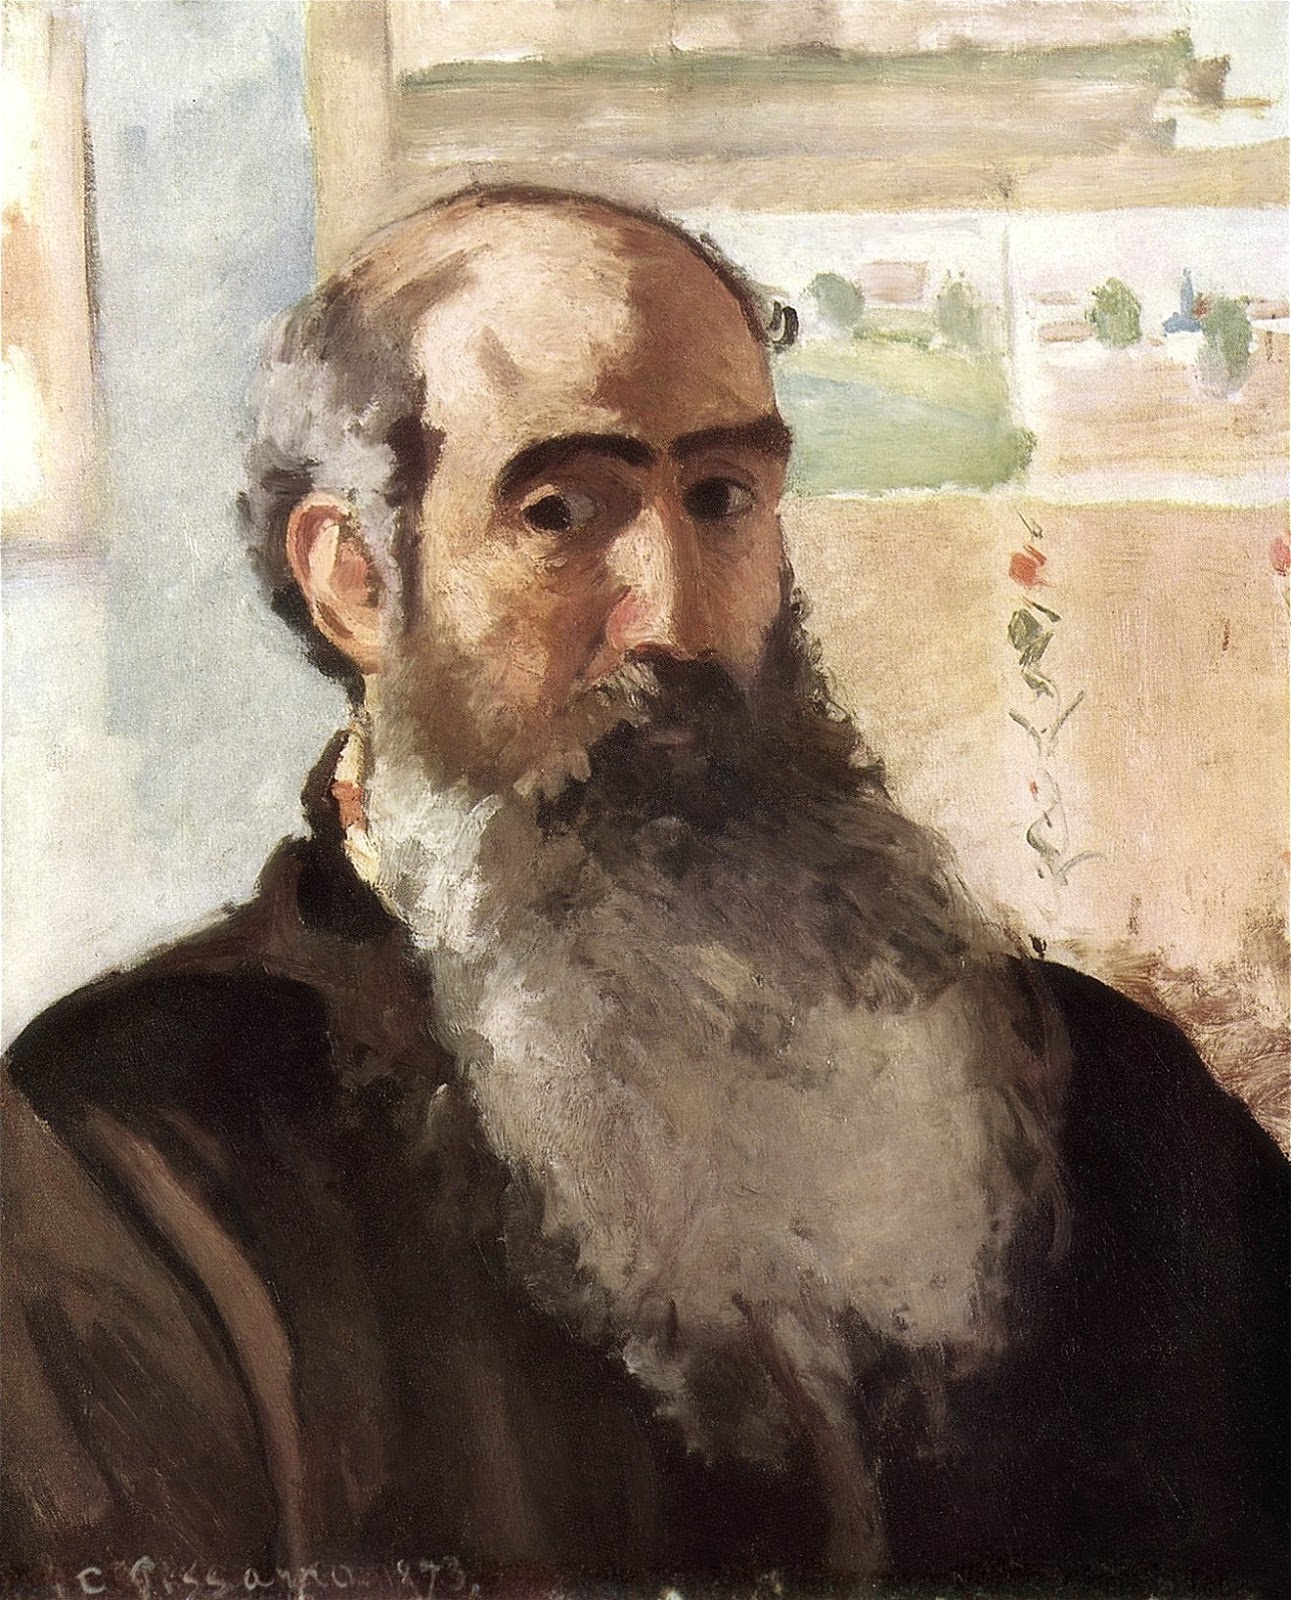 Camille+Pissarro-1830-1903 (191).jpg